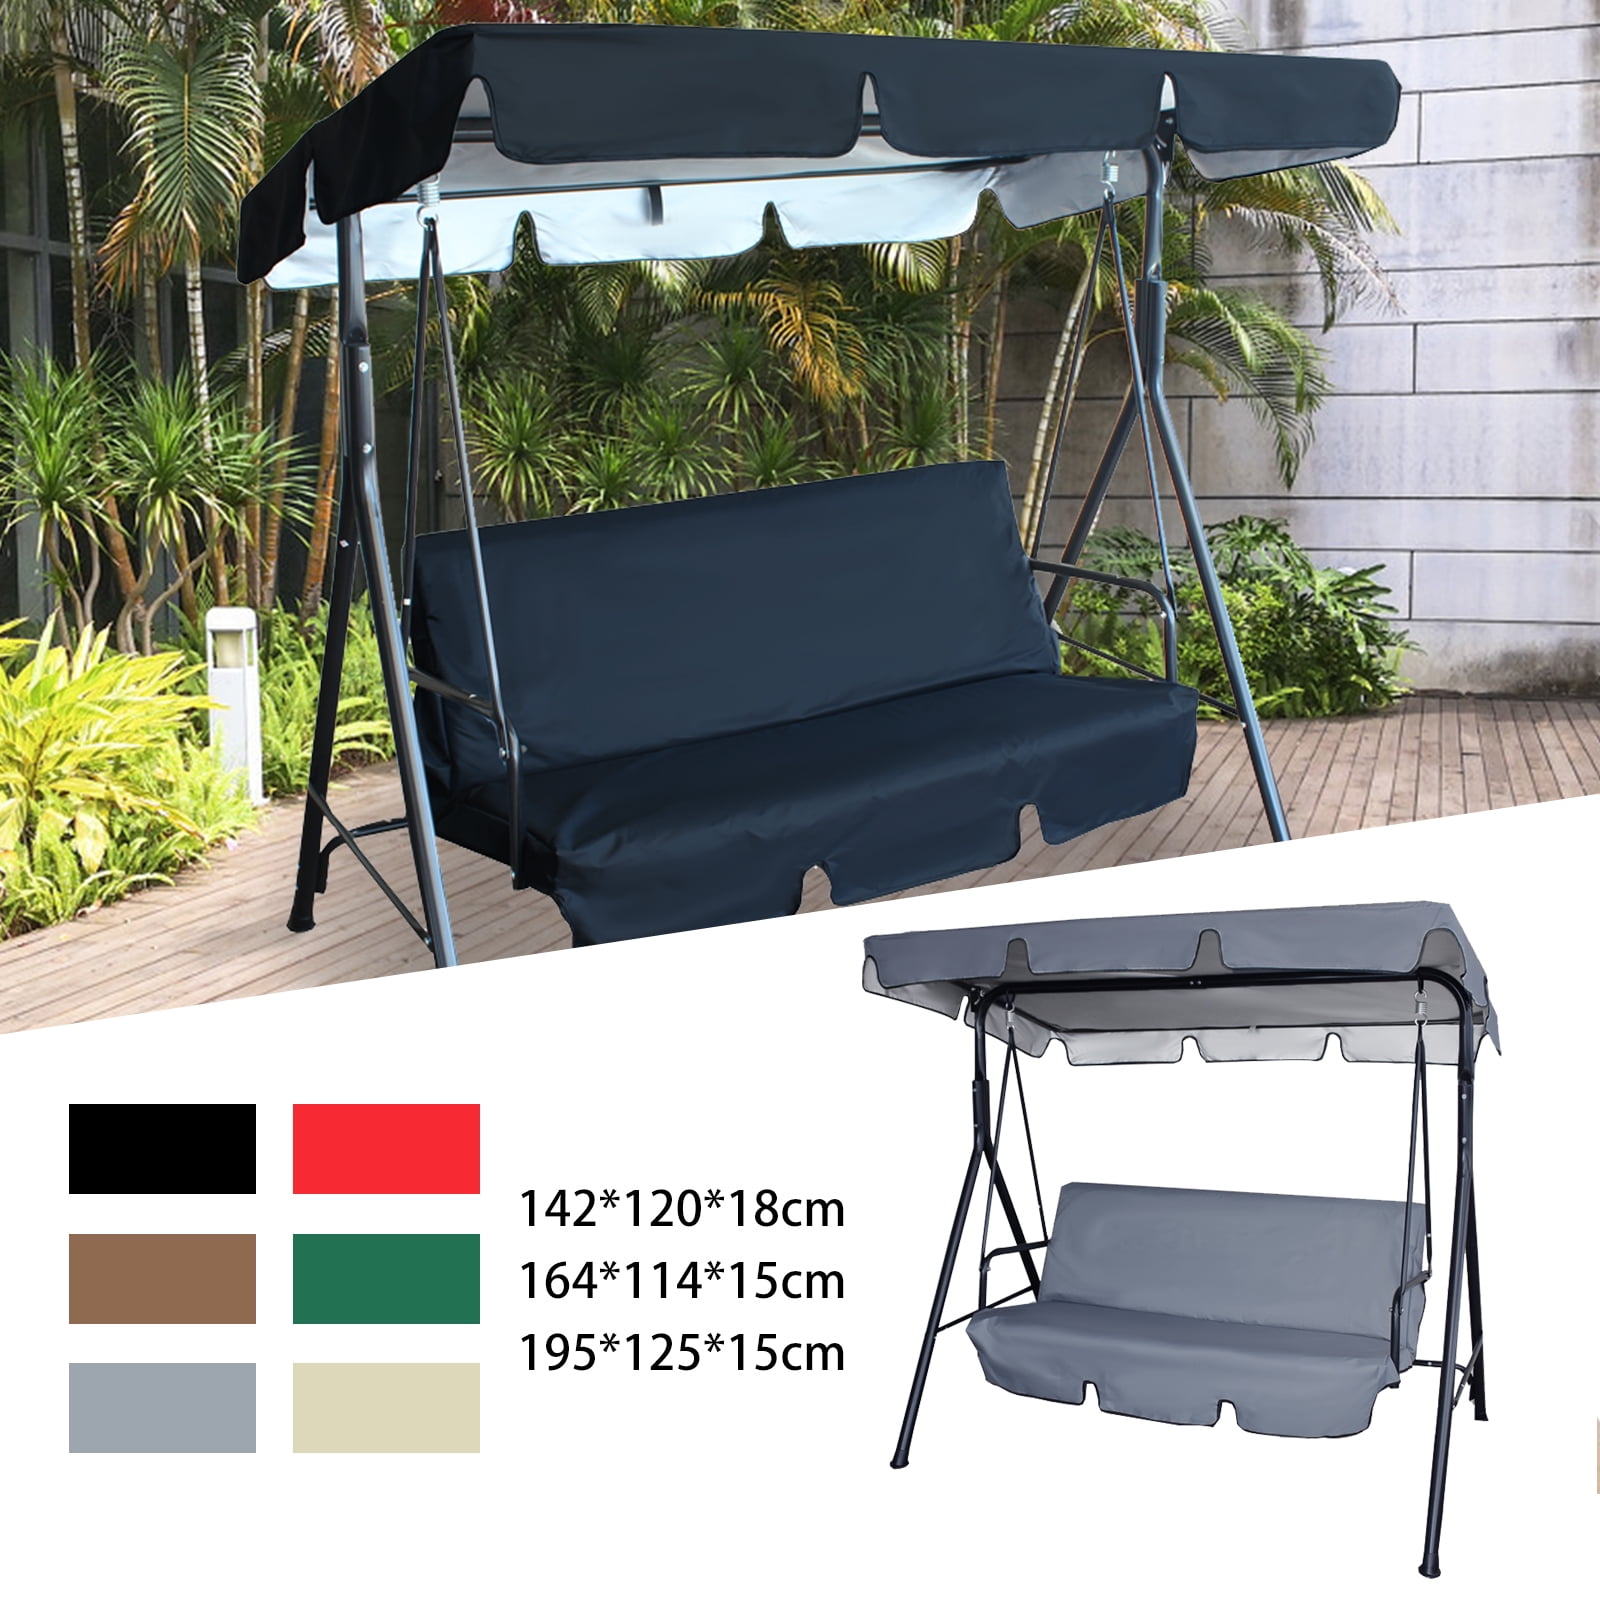 Patio Swing Canopy Seat Top Cover Waterproof Replacement Sunshade Outdoor Garden 